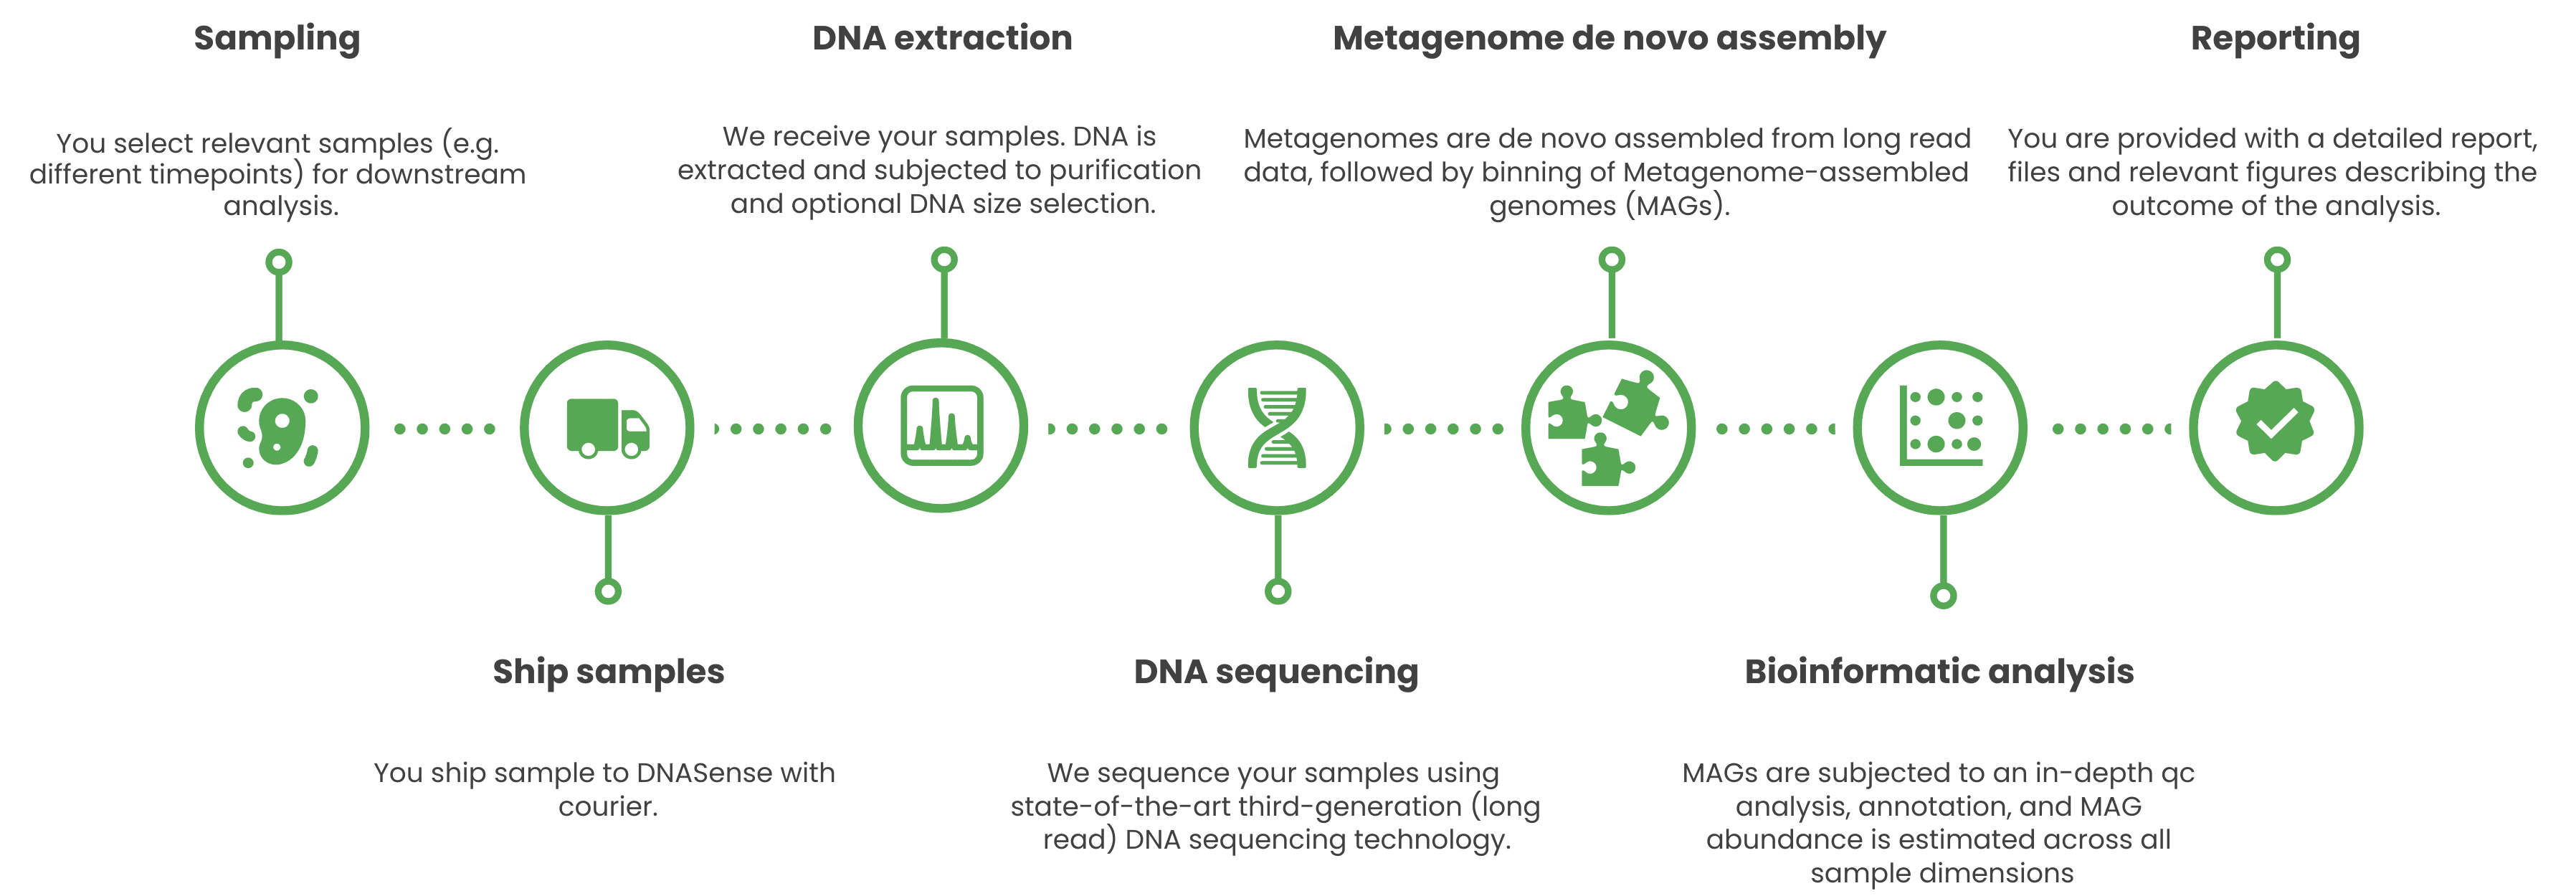 Figure summarizing the metagenomics workflow